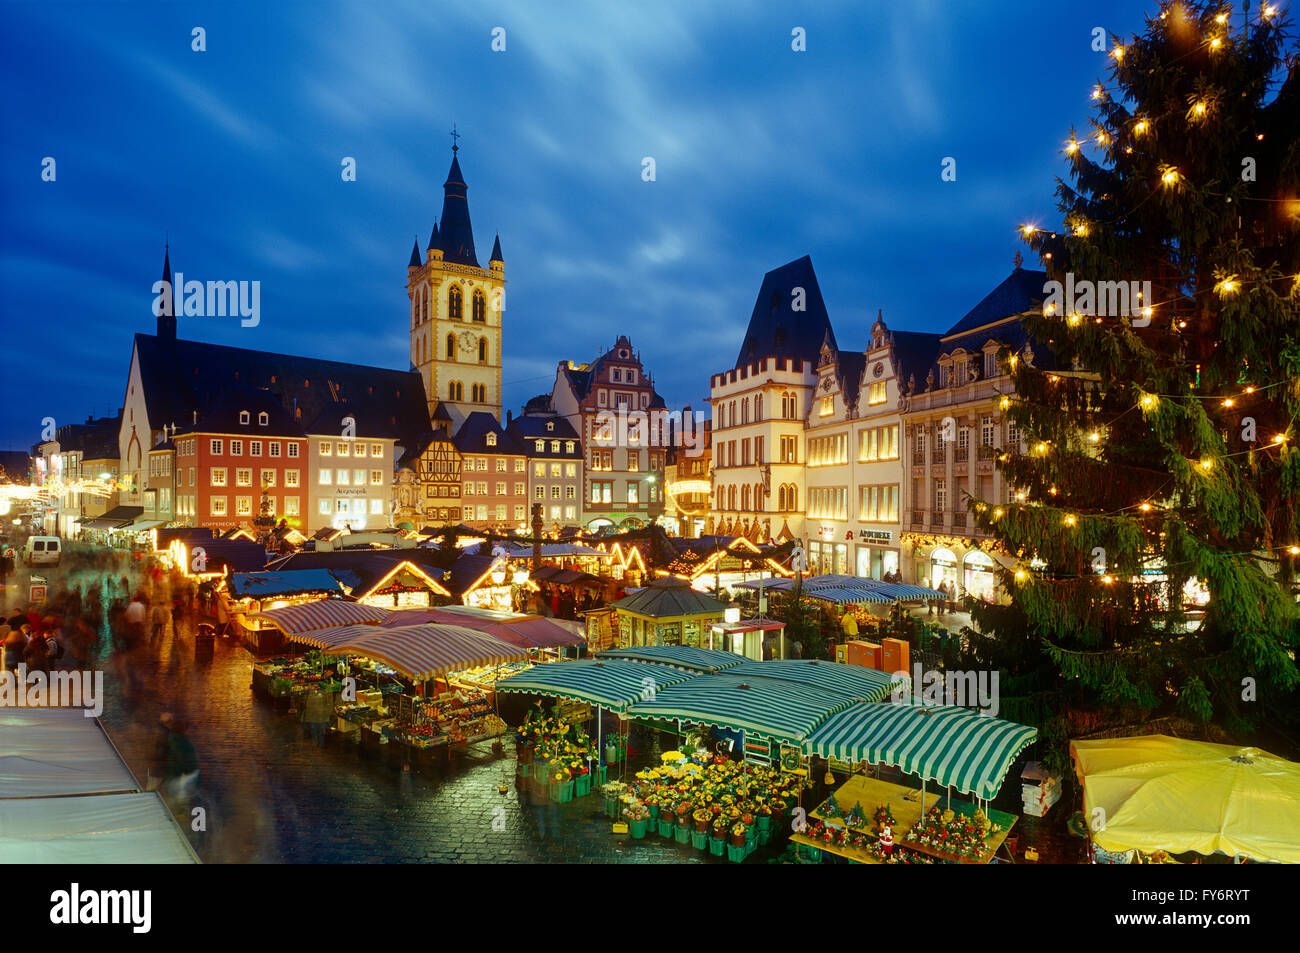 Christmas market in Tier, Market Square, Rhineland Palatinate, Germany Stock Photo